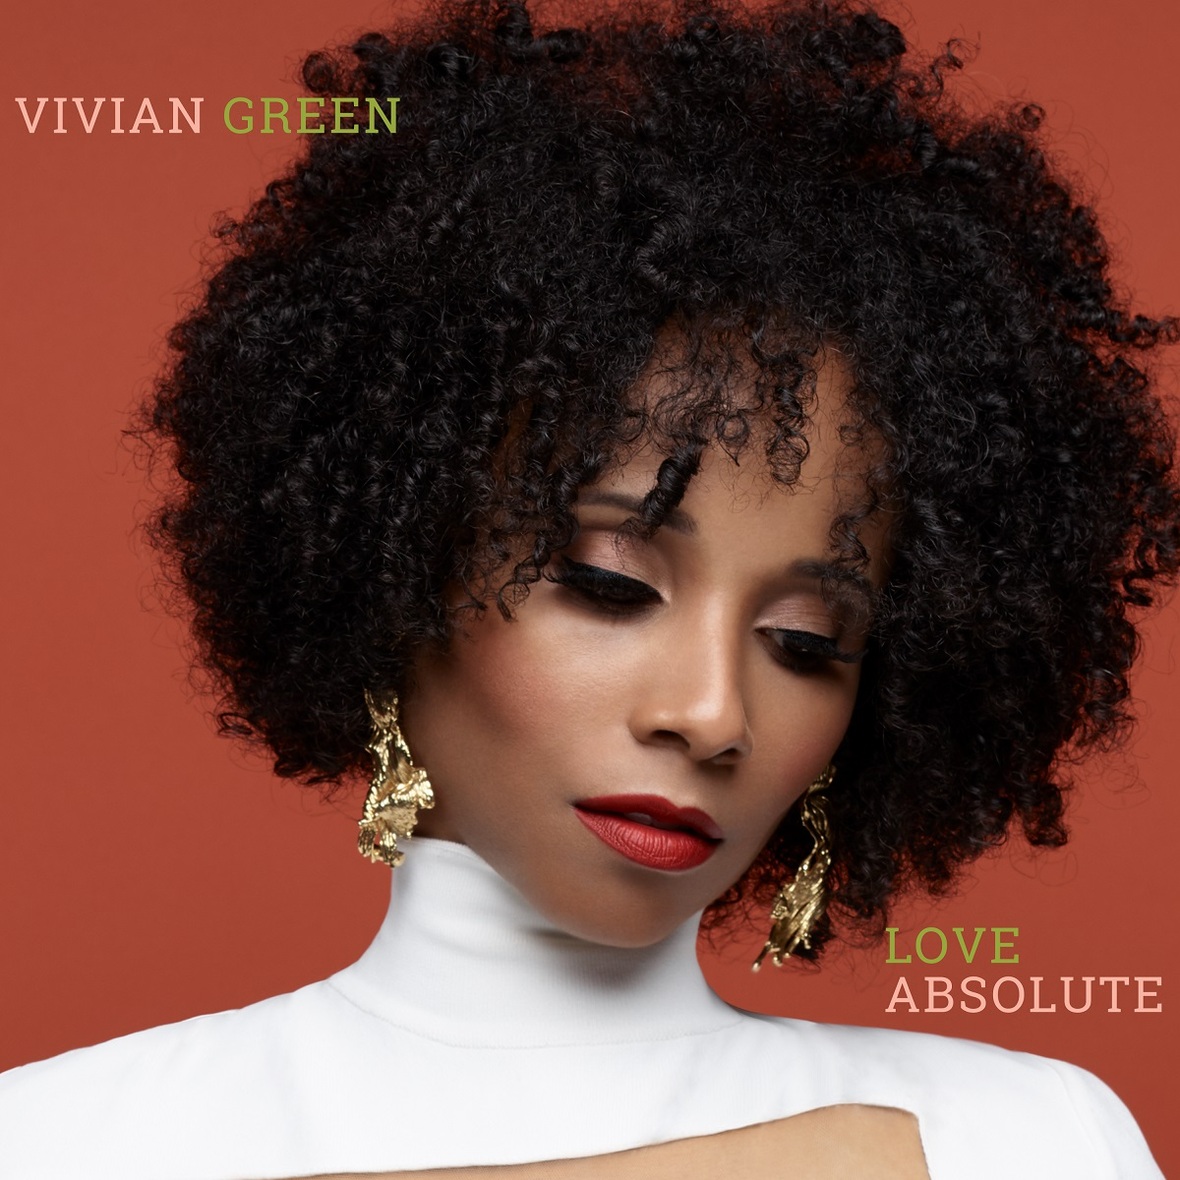 Vivian Green Releases New Album "Love Absolute"